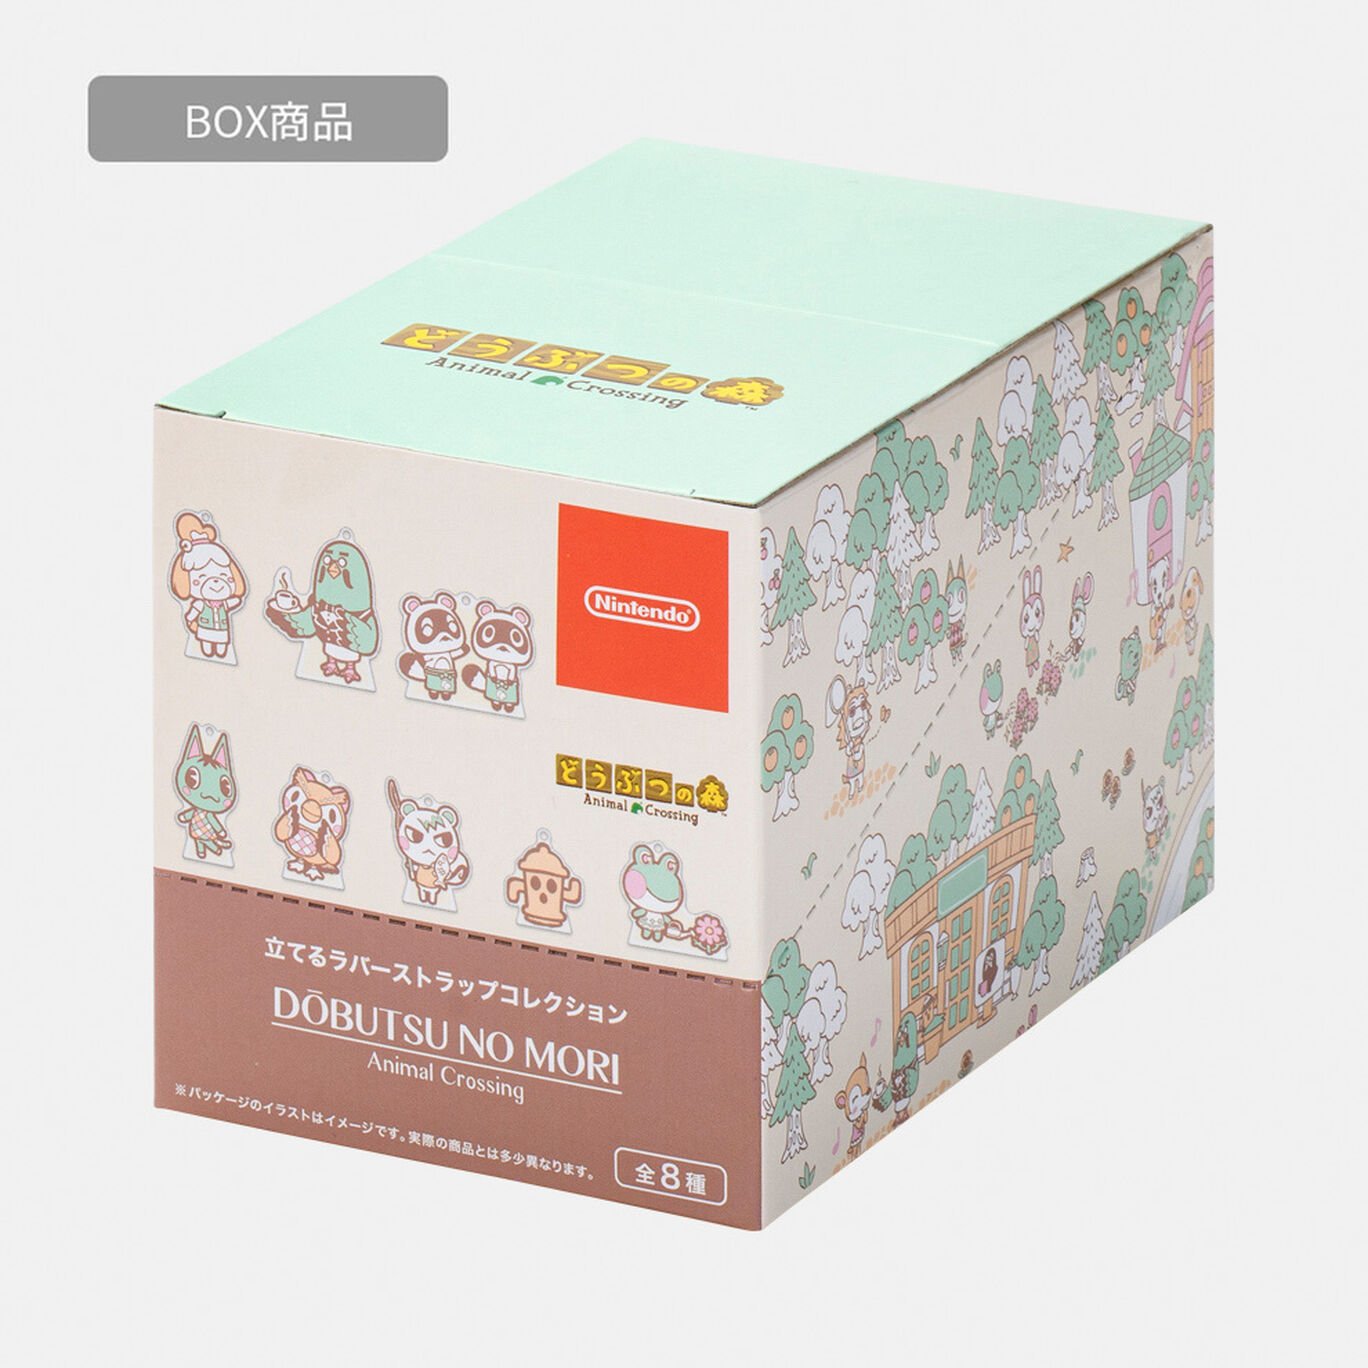 【BOX商品】立てるラバーストラップコレクション どうぶつの森【Nintendo TOKYO/OSAKA取り扱い商品】